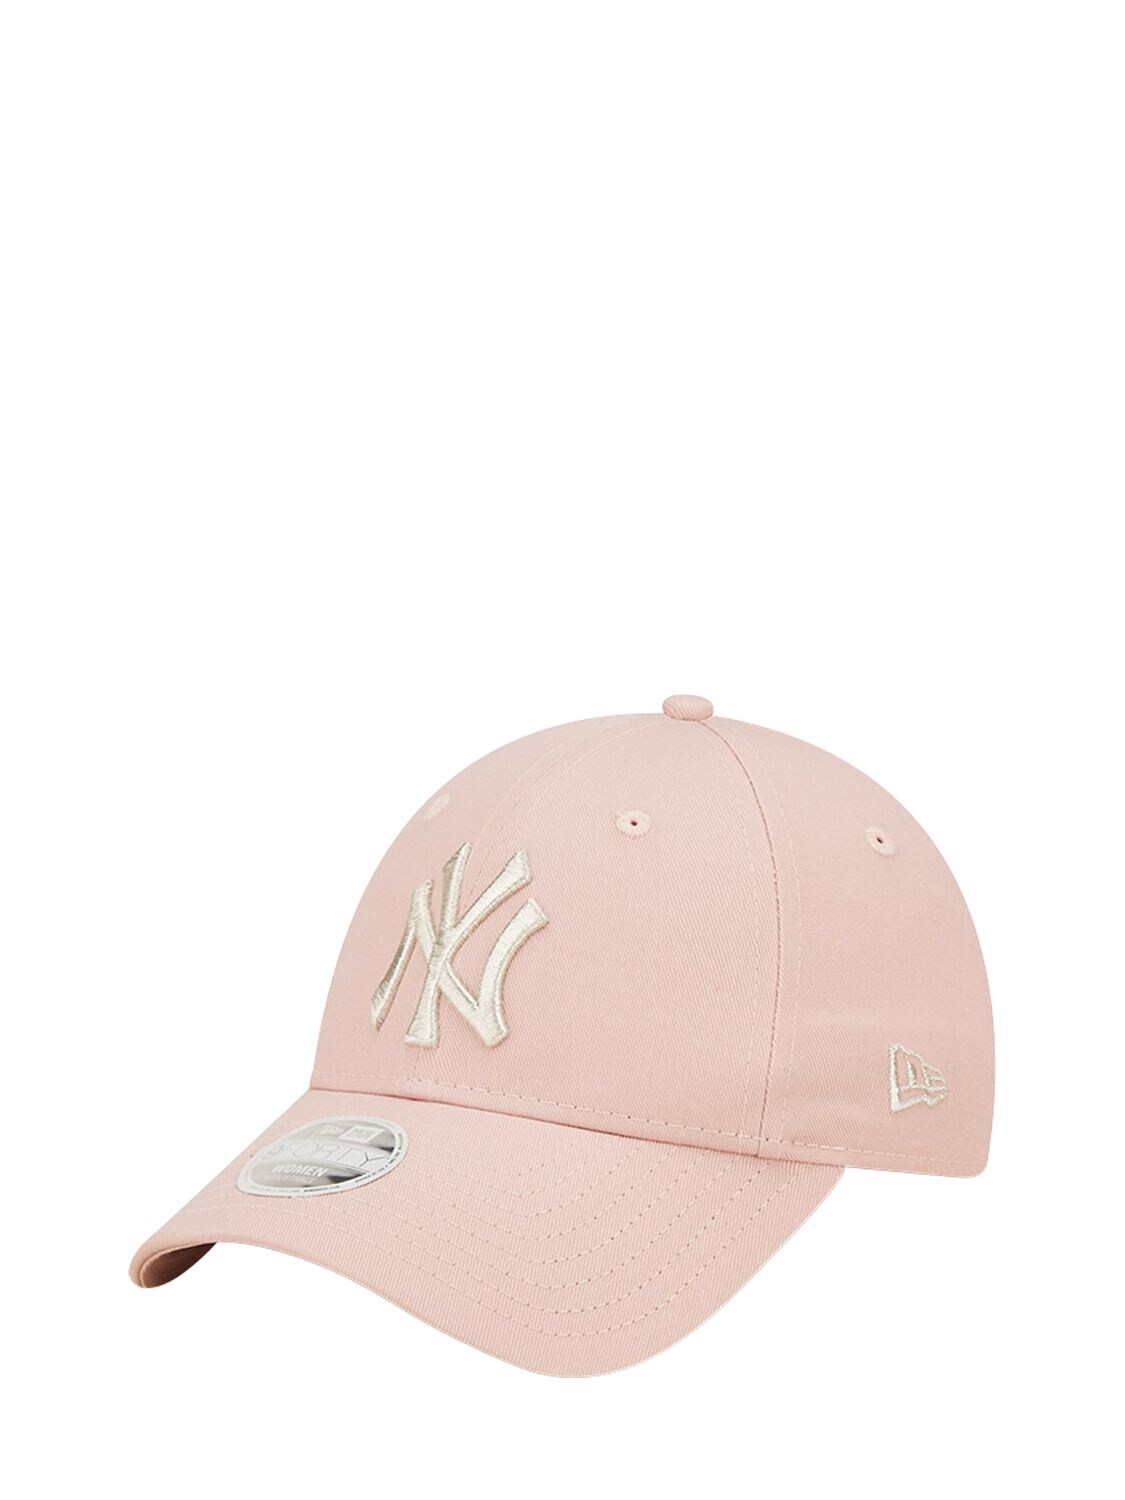 Womens NY Yankees New Era 940 Pink Baseball Cap